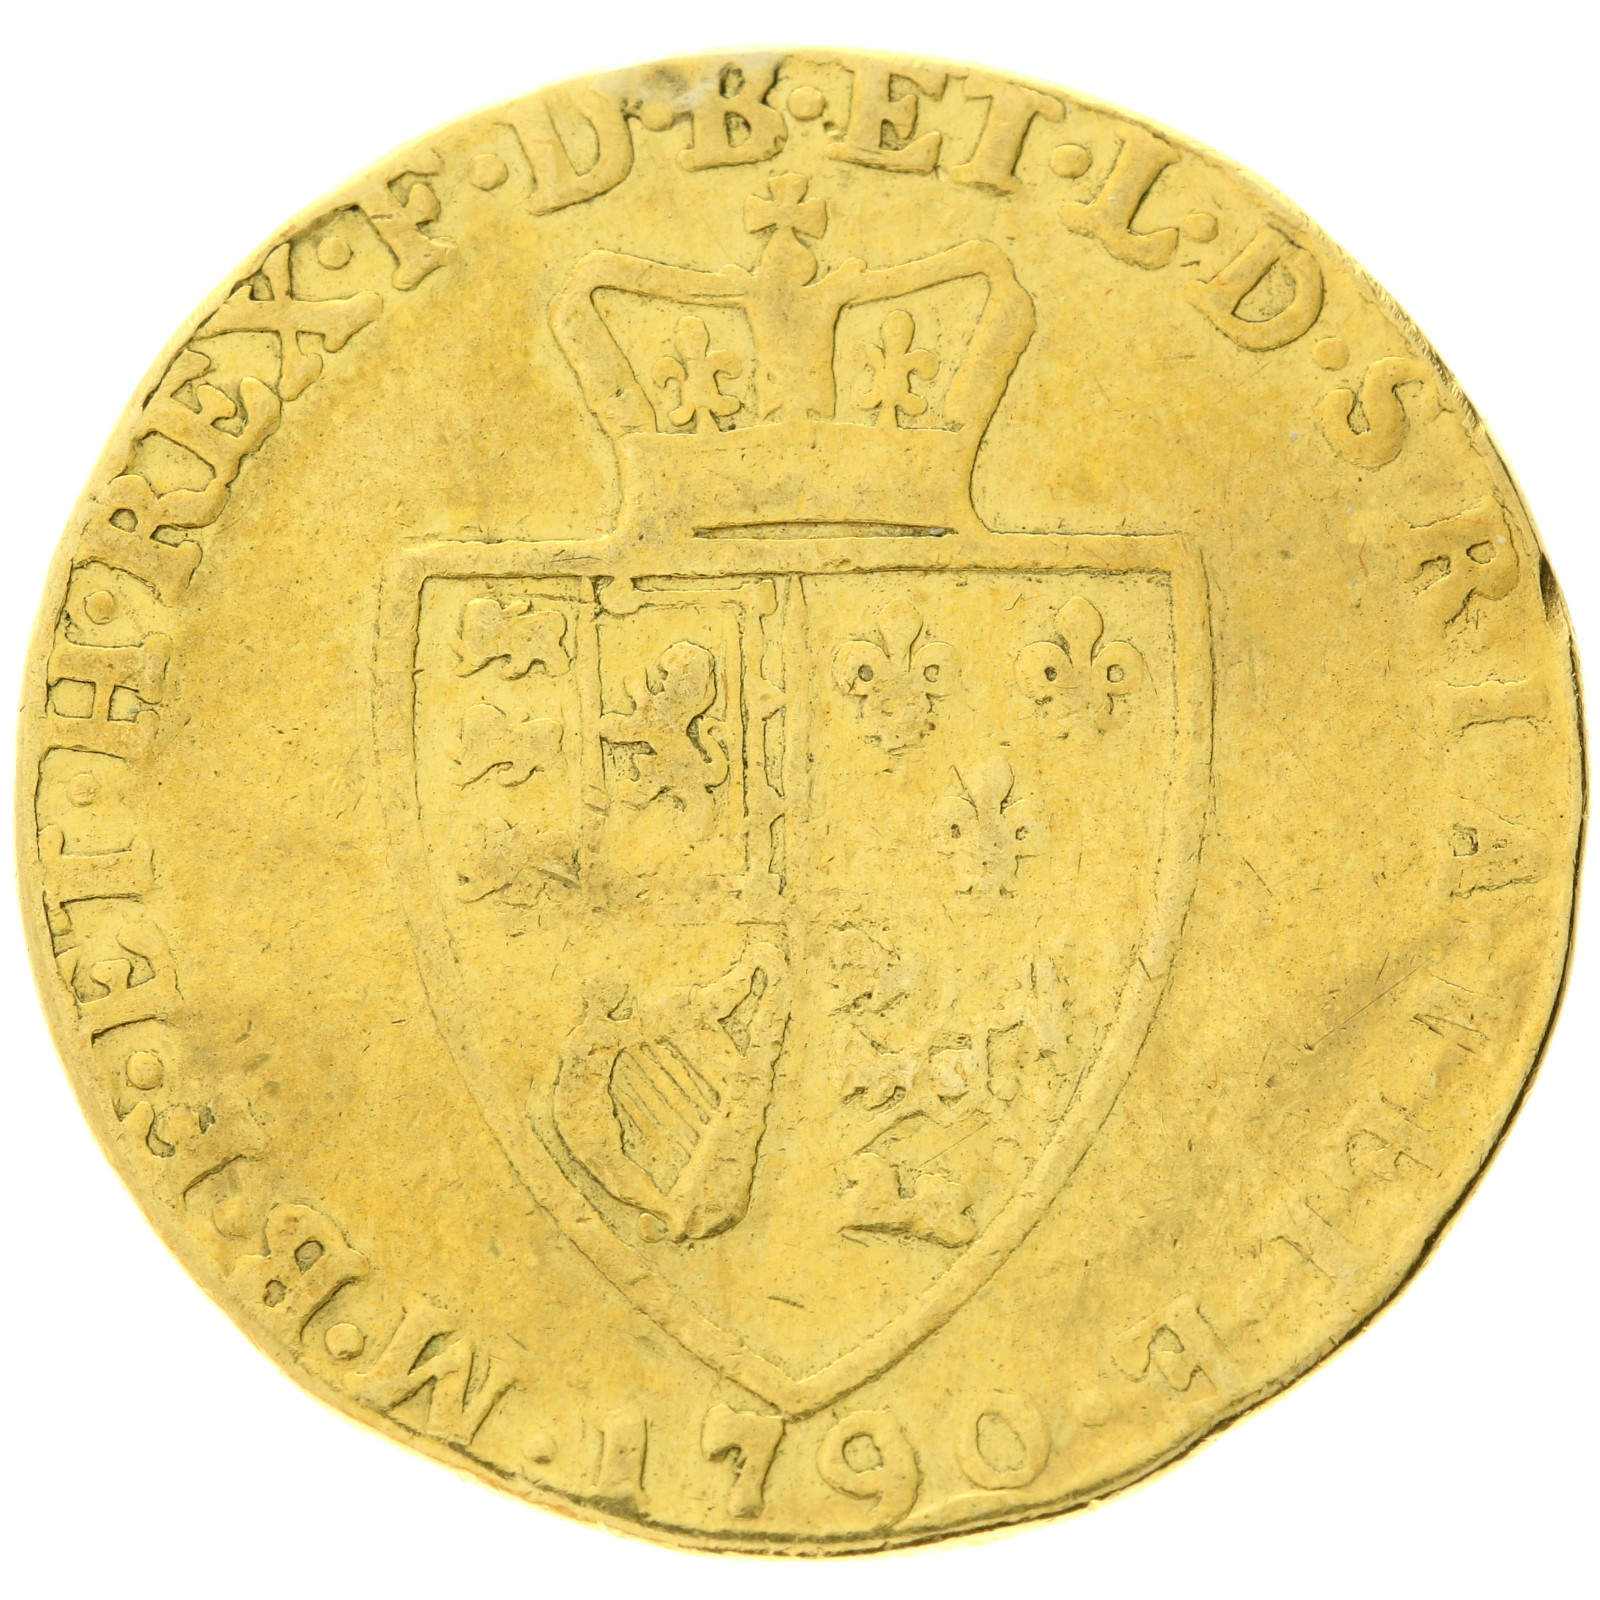 United Kingdom - 1 Guinea - 1790 - George III